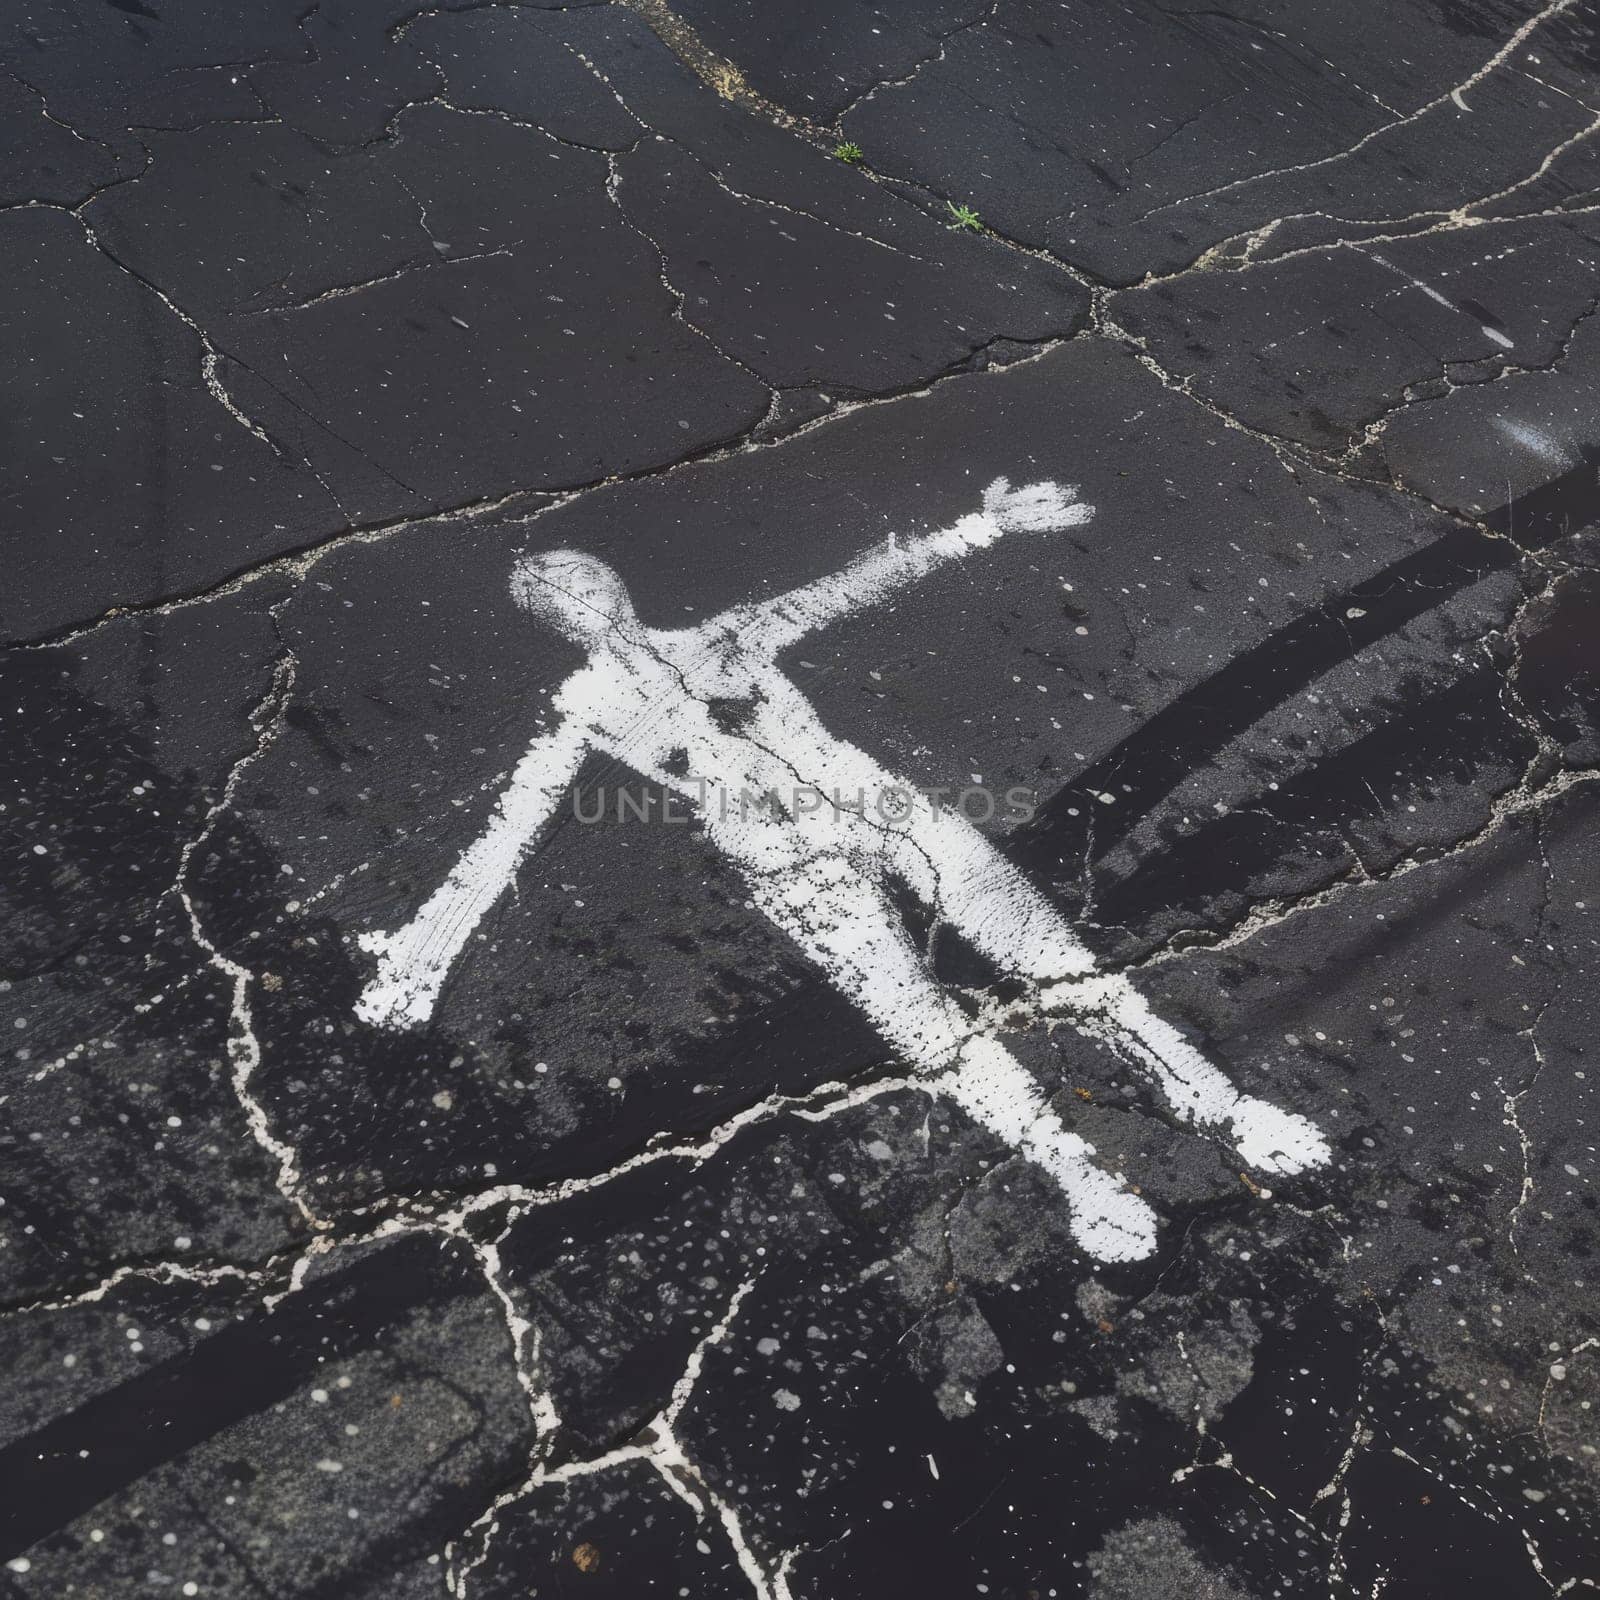 Chalk outline of a human figure on dark asphalt, reminiscent of a crime scene. by sfinks